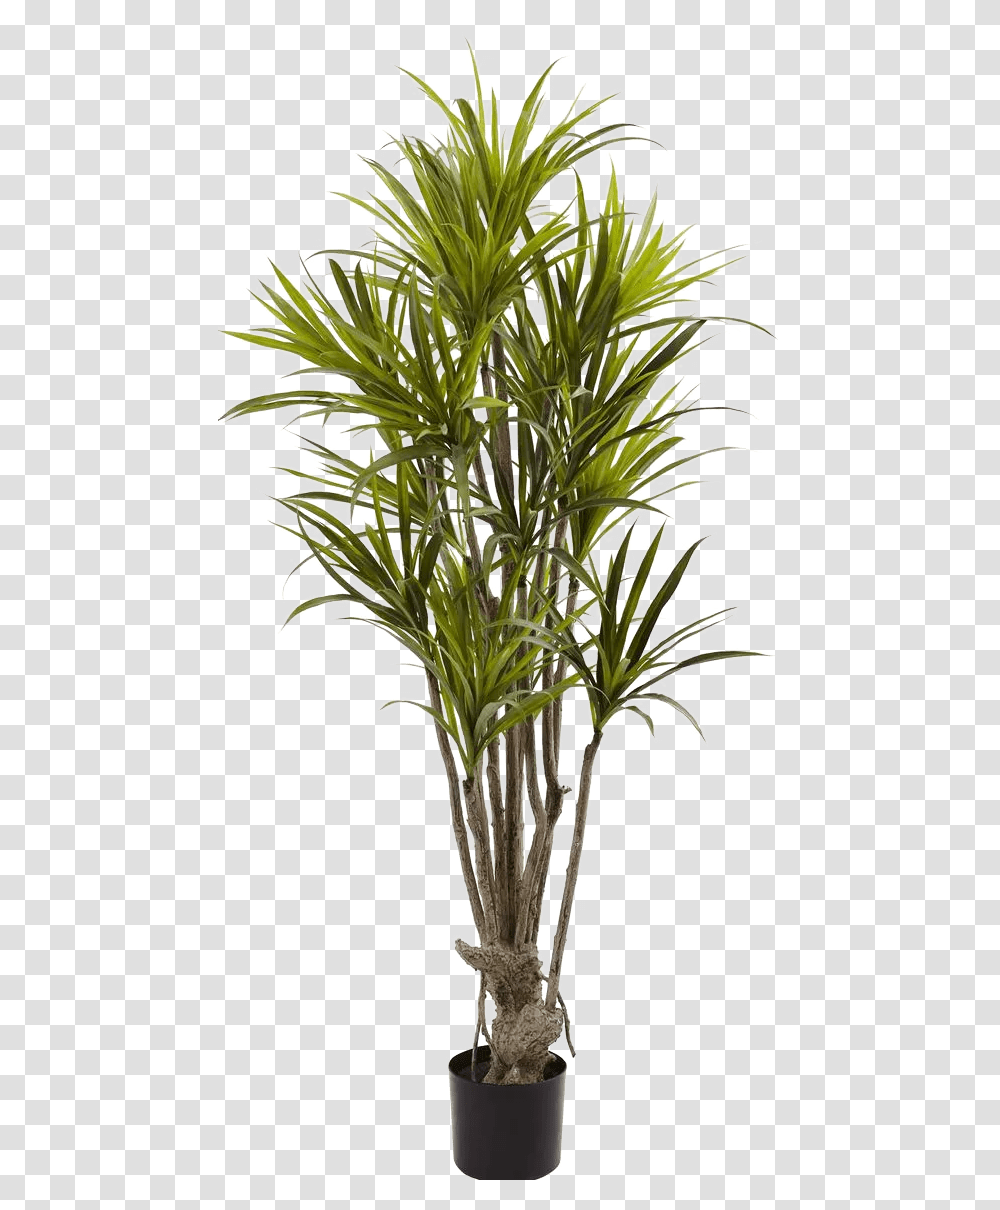 Images Pngs Plant Plants Dracaena Tree, Palm Tree, Arecaceae, Pineapple, Fruit Transparent Png